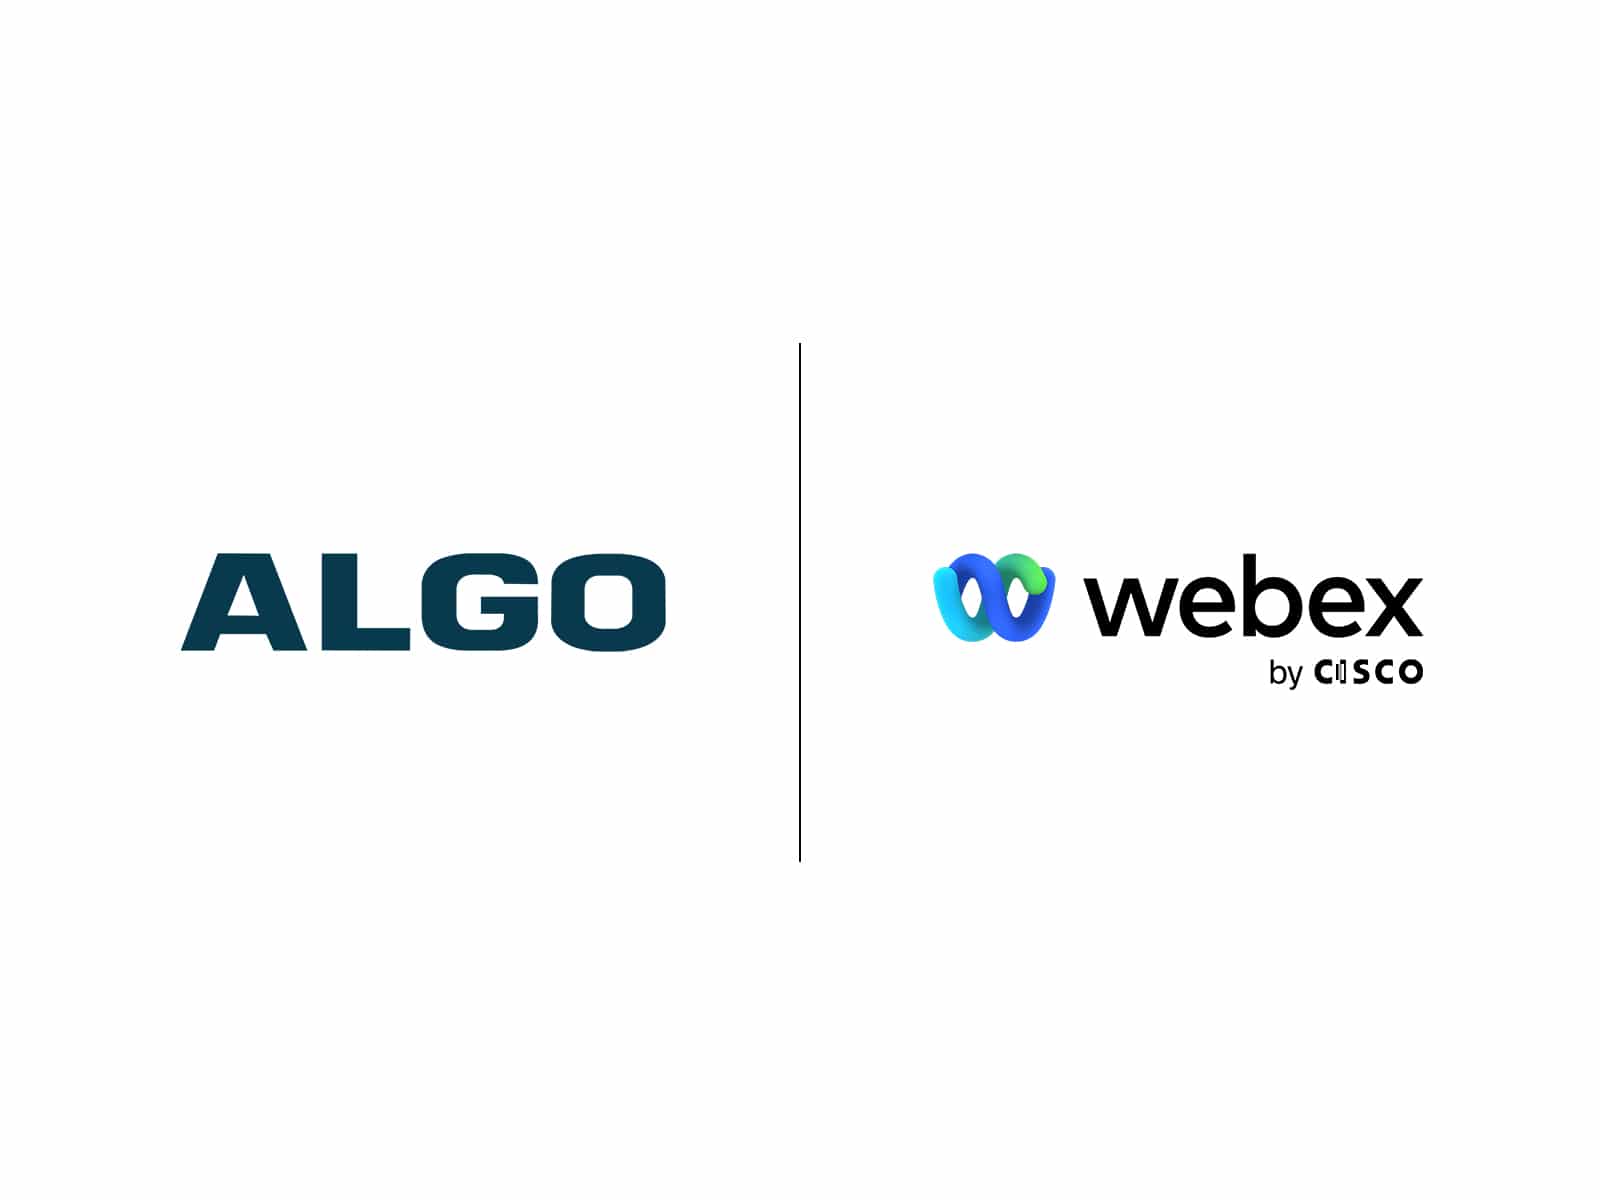 Algo and Webex by Cisco